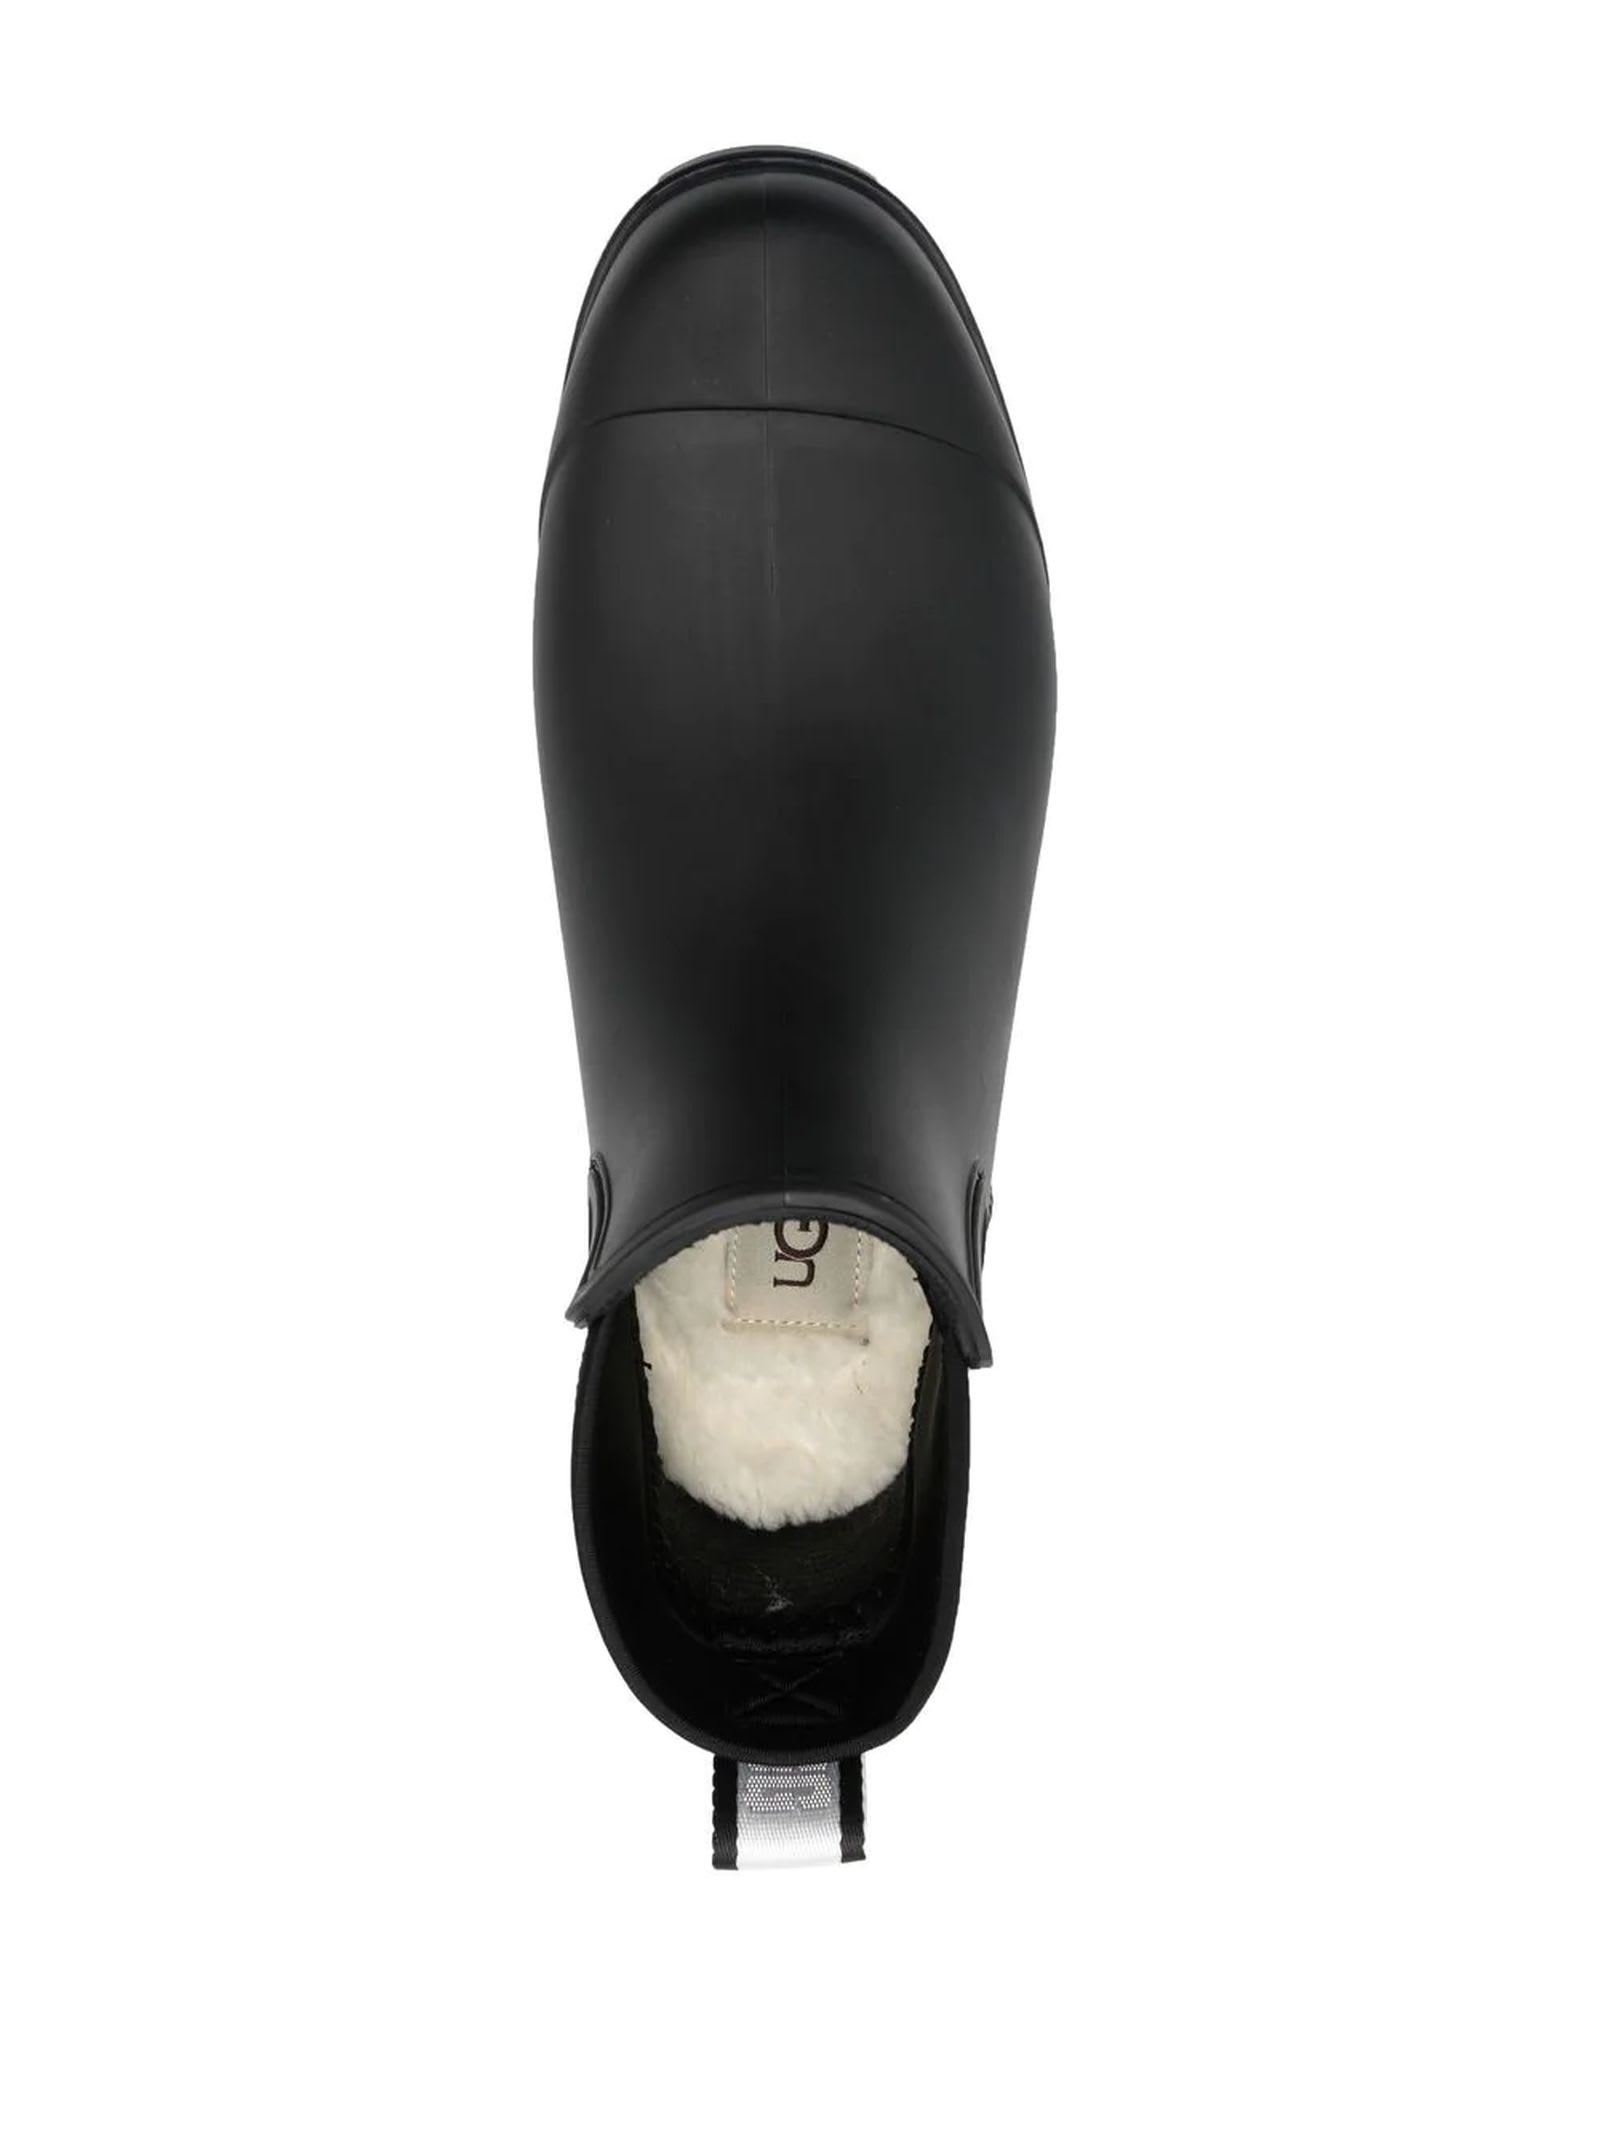 Shop Ugg Droplet Boot Waterproof In Black